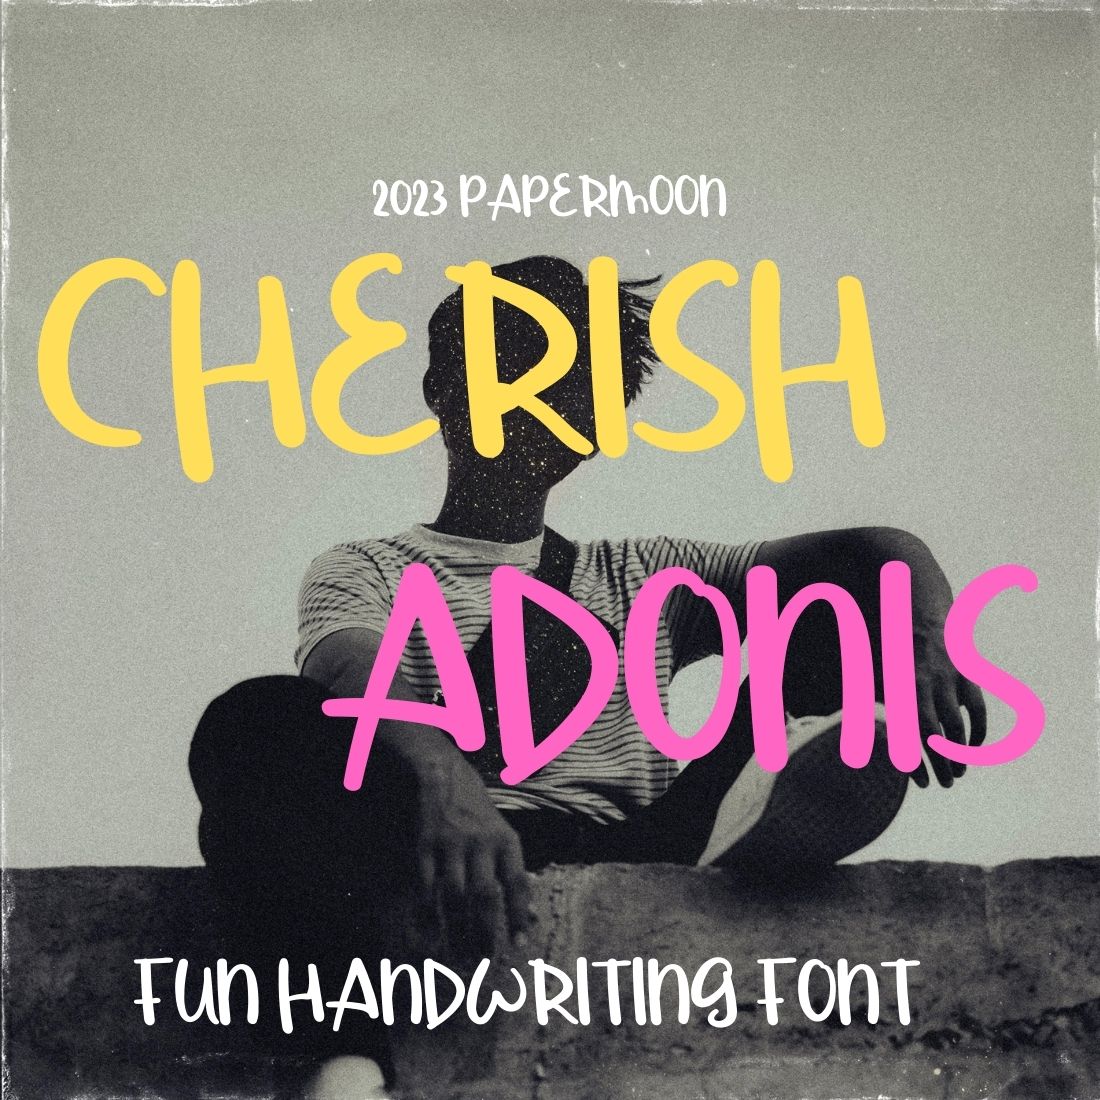 Cherish Adonis: Fun Handwriting Font cover image.